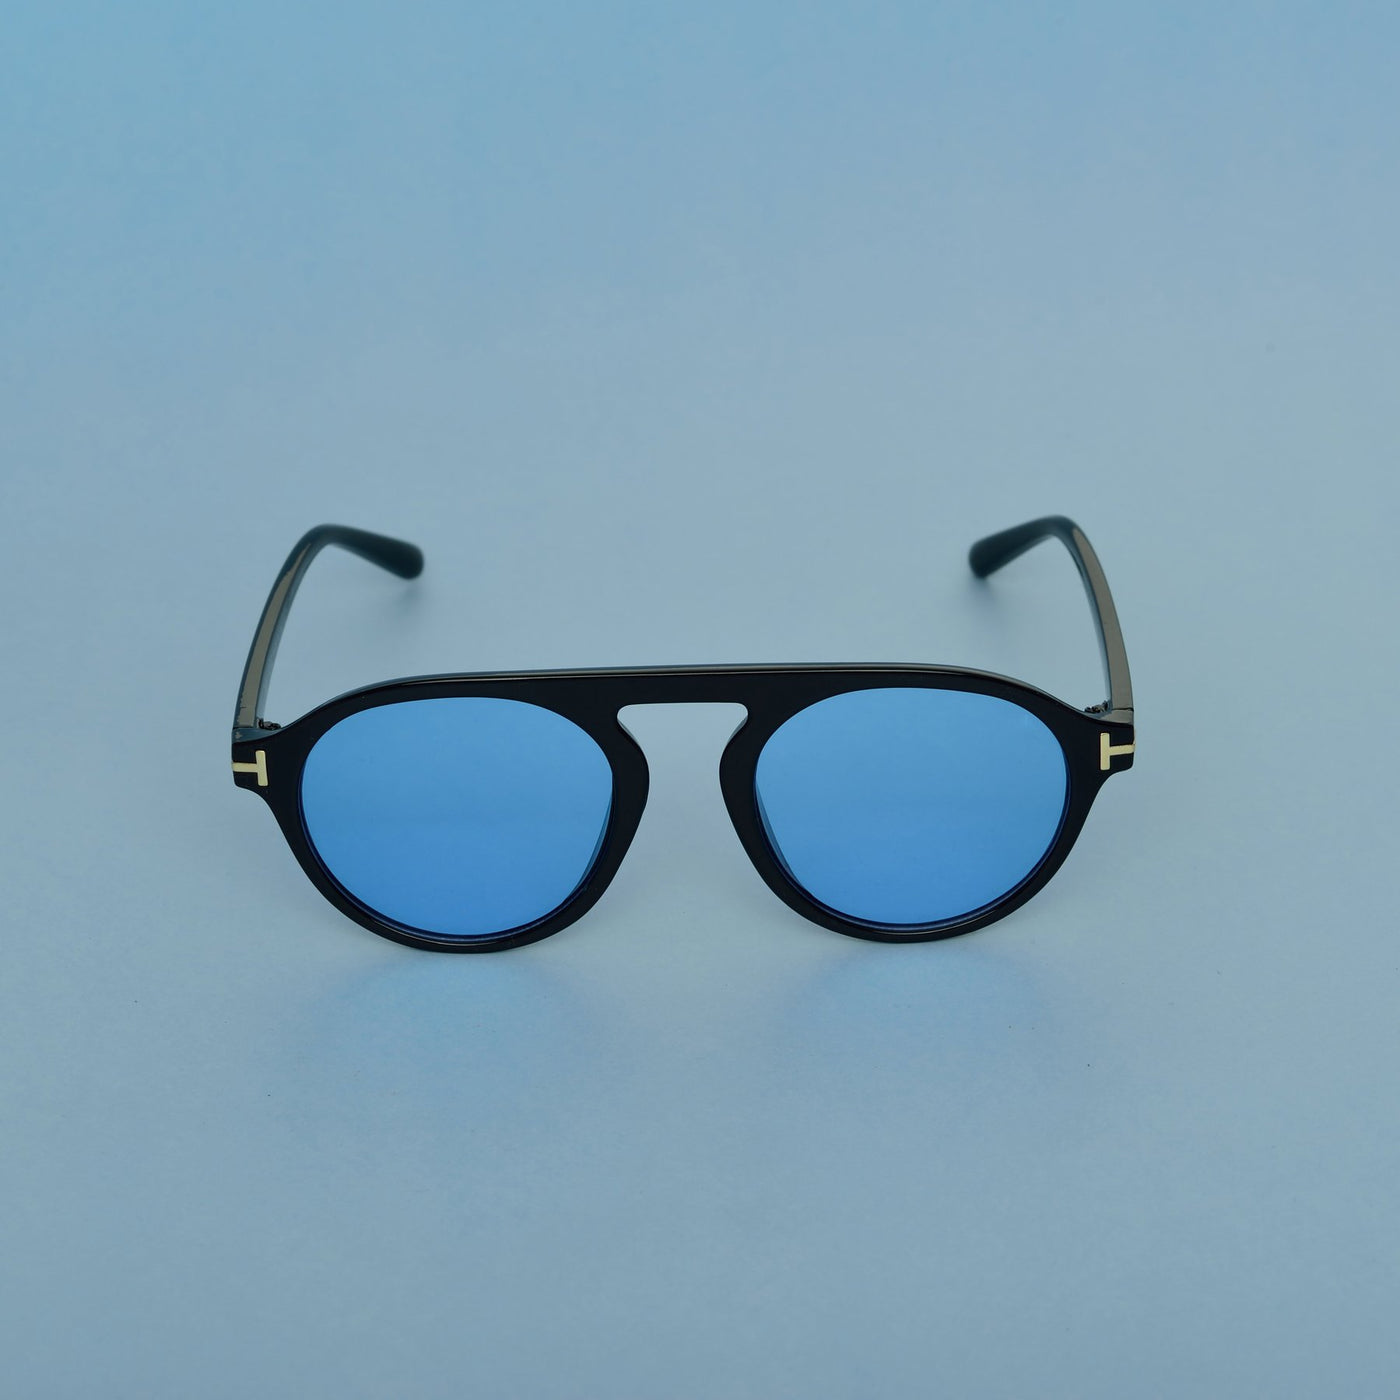 Round Aqua Blue And Black Sunglasses For Men And Women-Unique and Classy